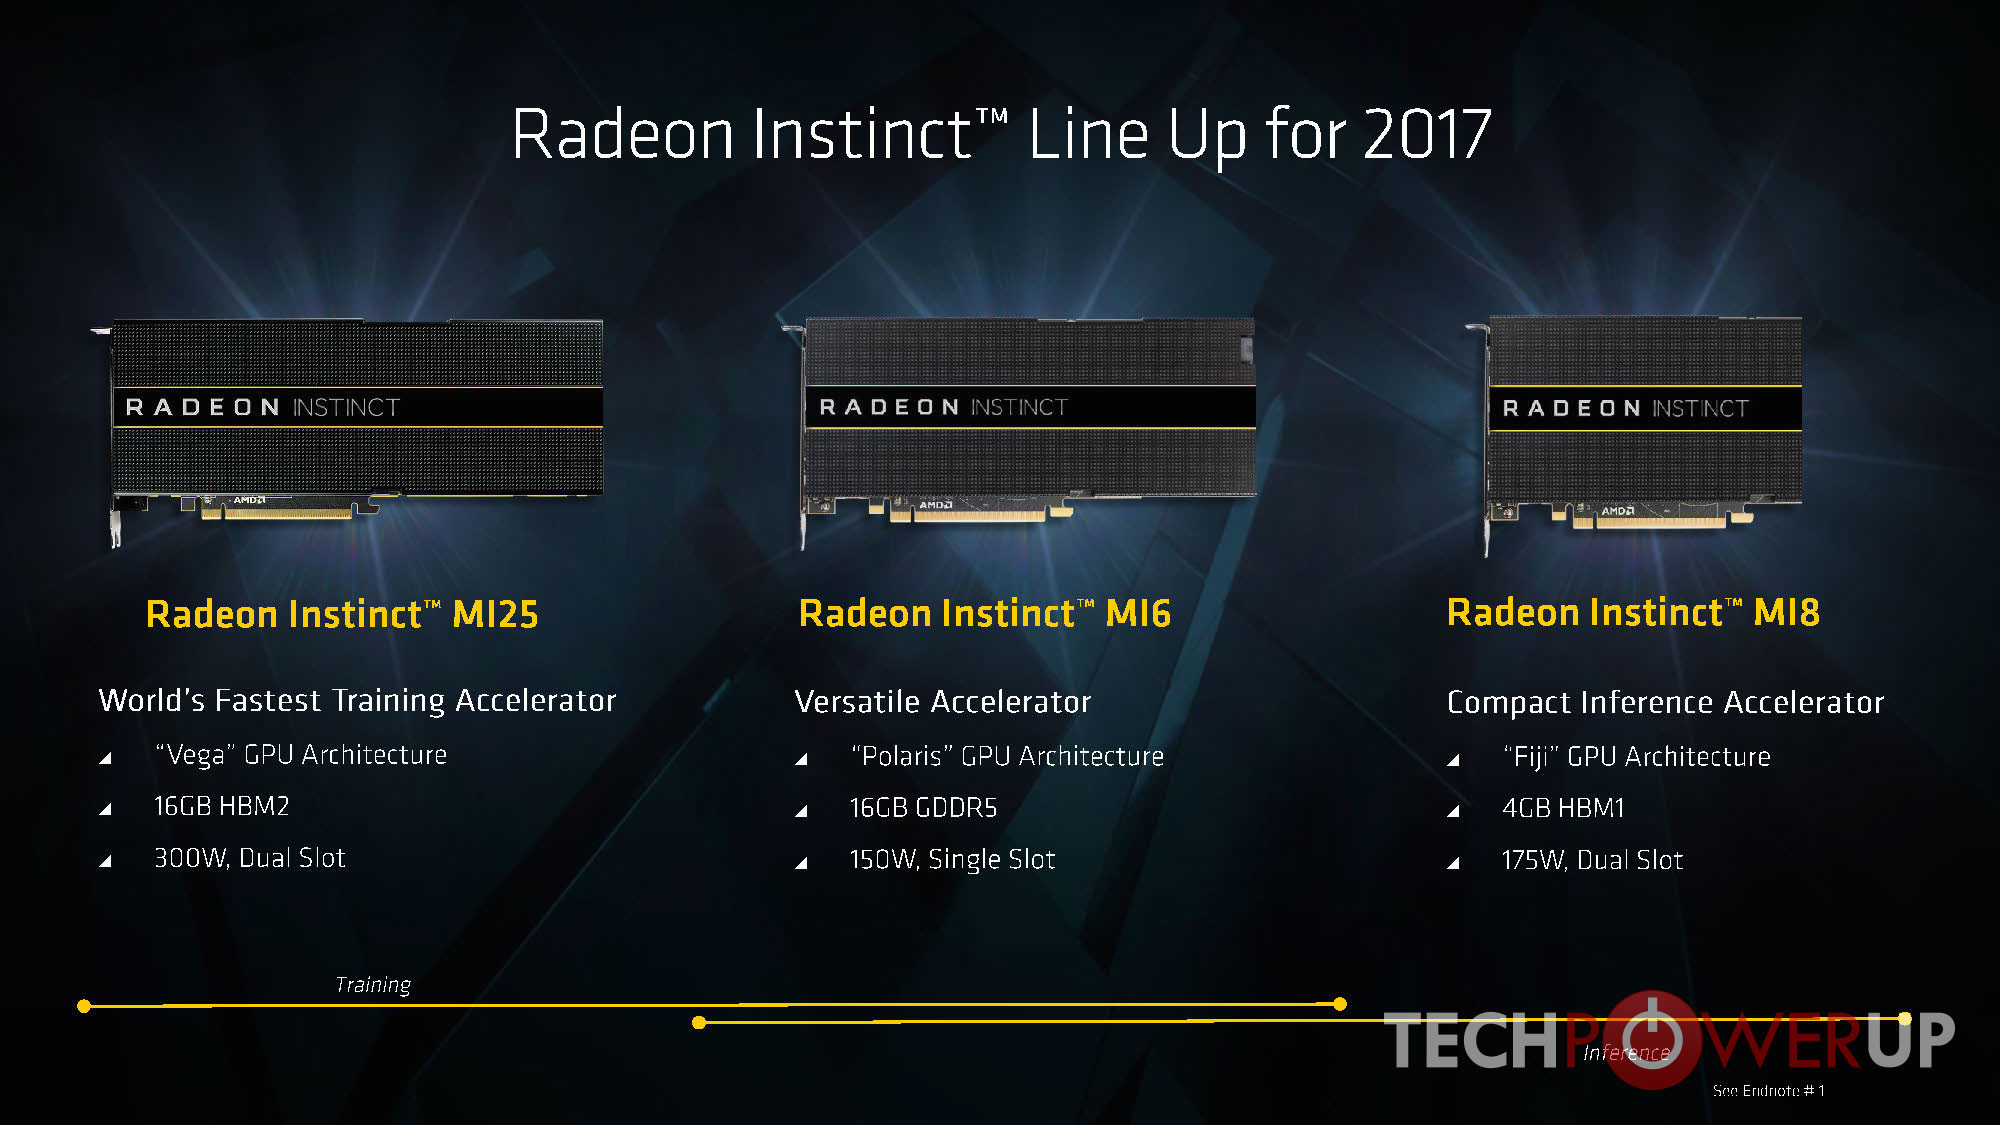 AMD also Announces Radeon Instinct MI8 